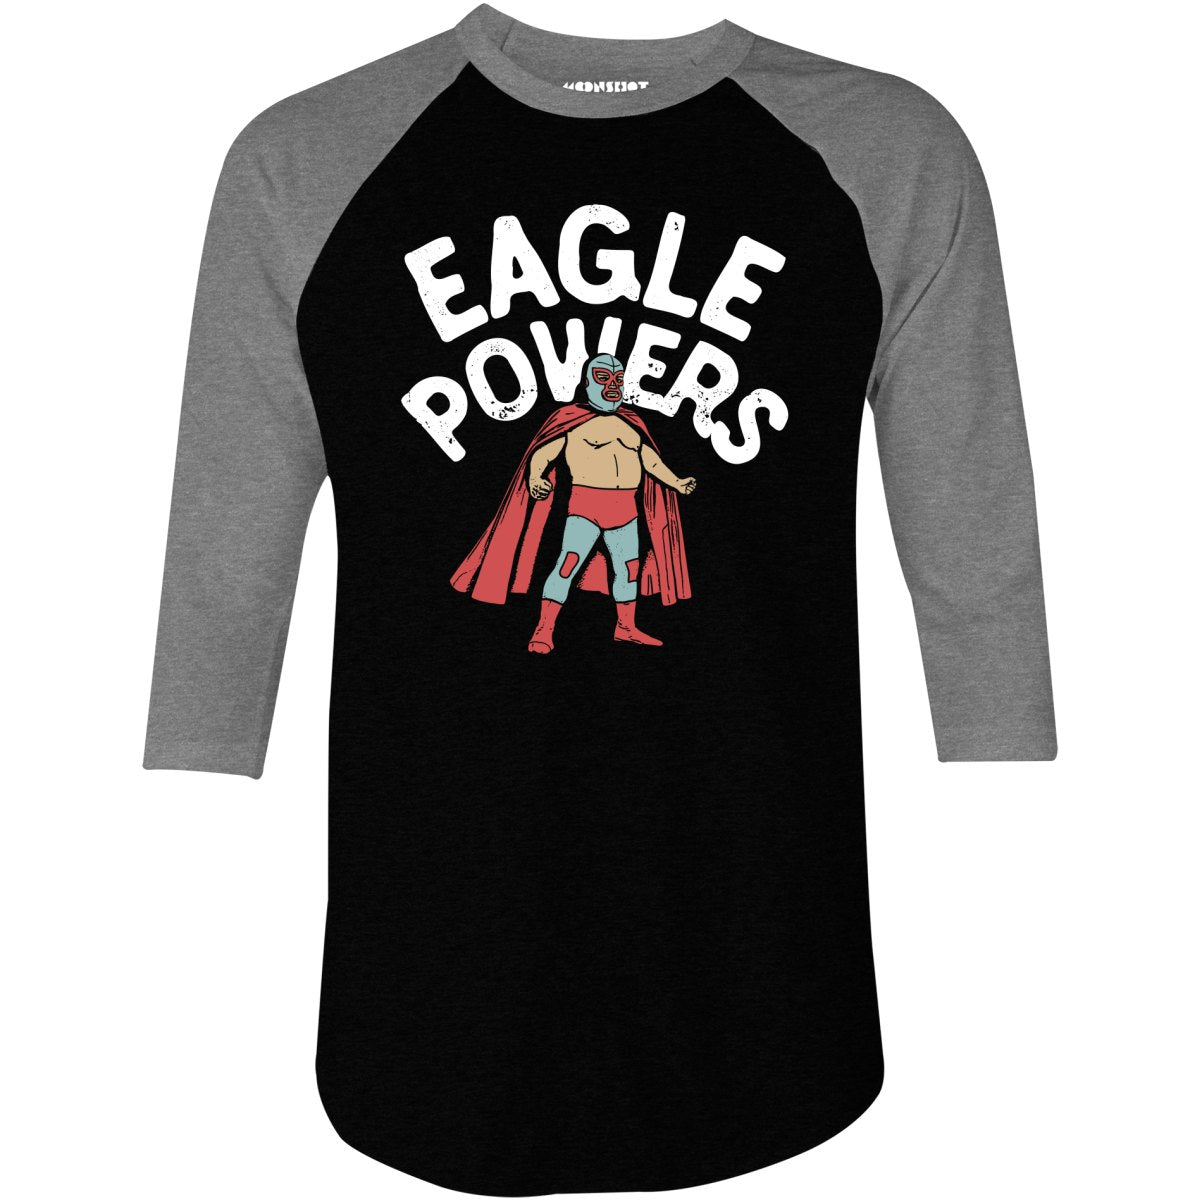 Eagle Powers - 3/4 Sleeve Raglan T-Shirt